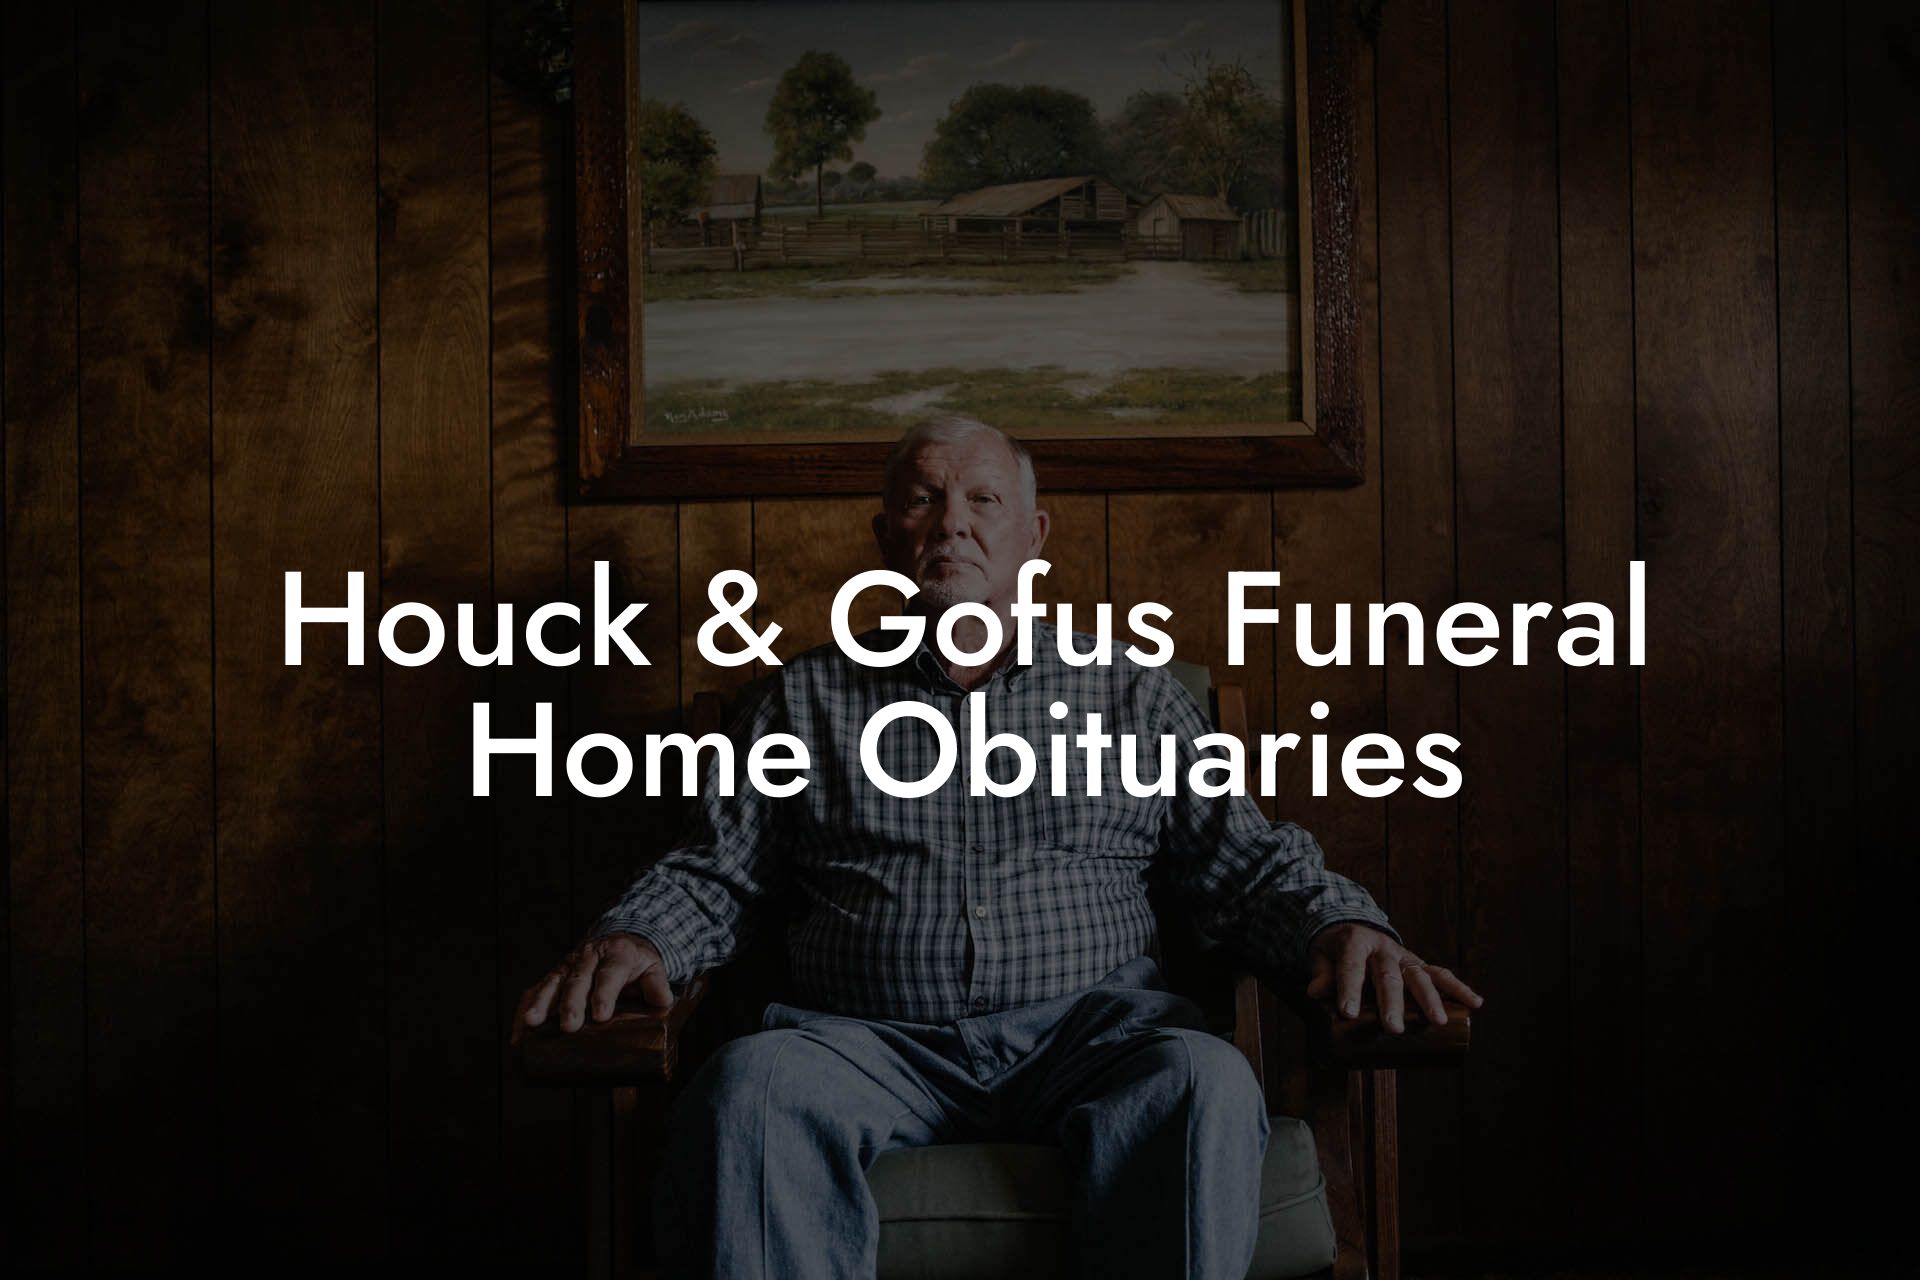 Houck & Gofus Funeral Home Obituaries